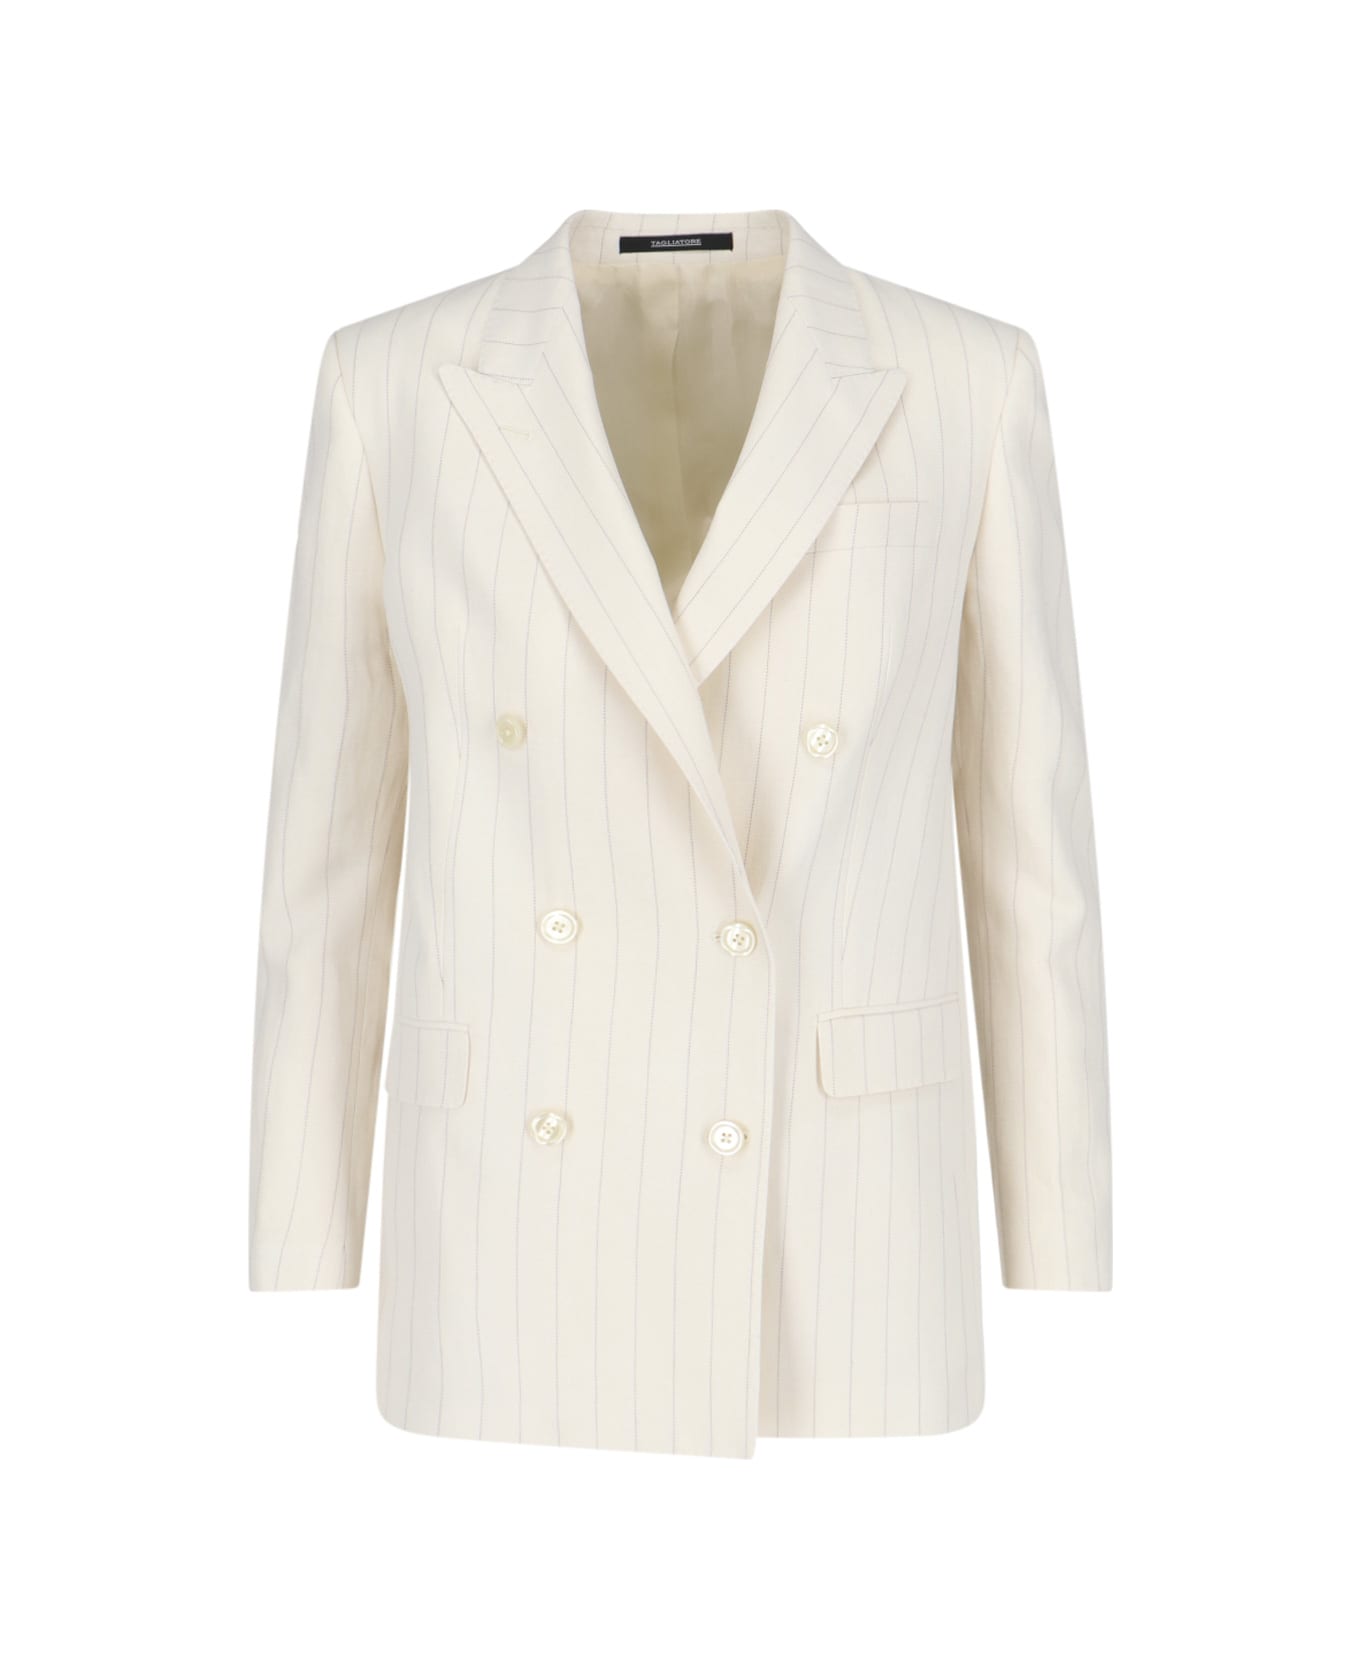 Tagliatore Double-breasted Suit - White